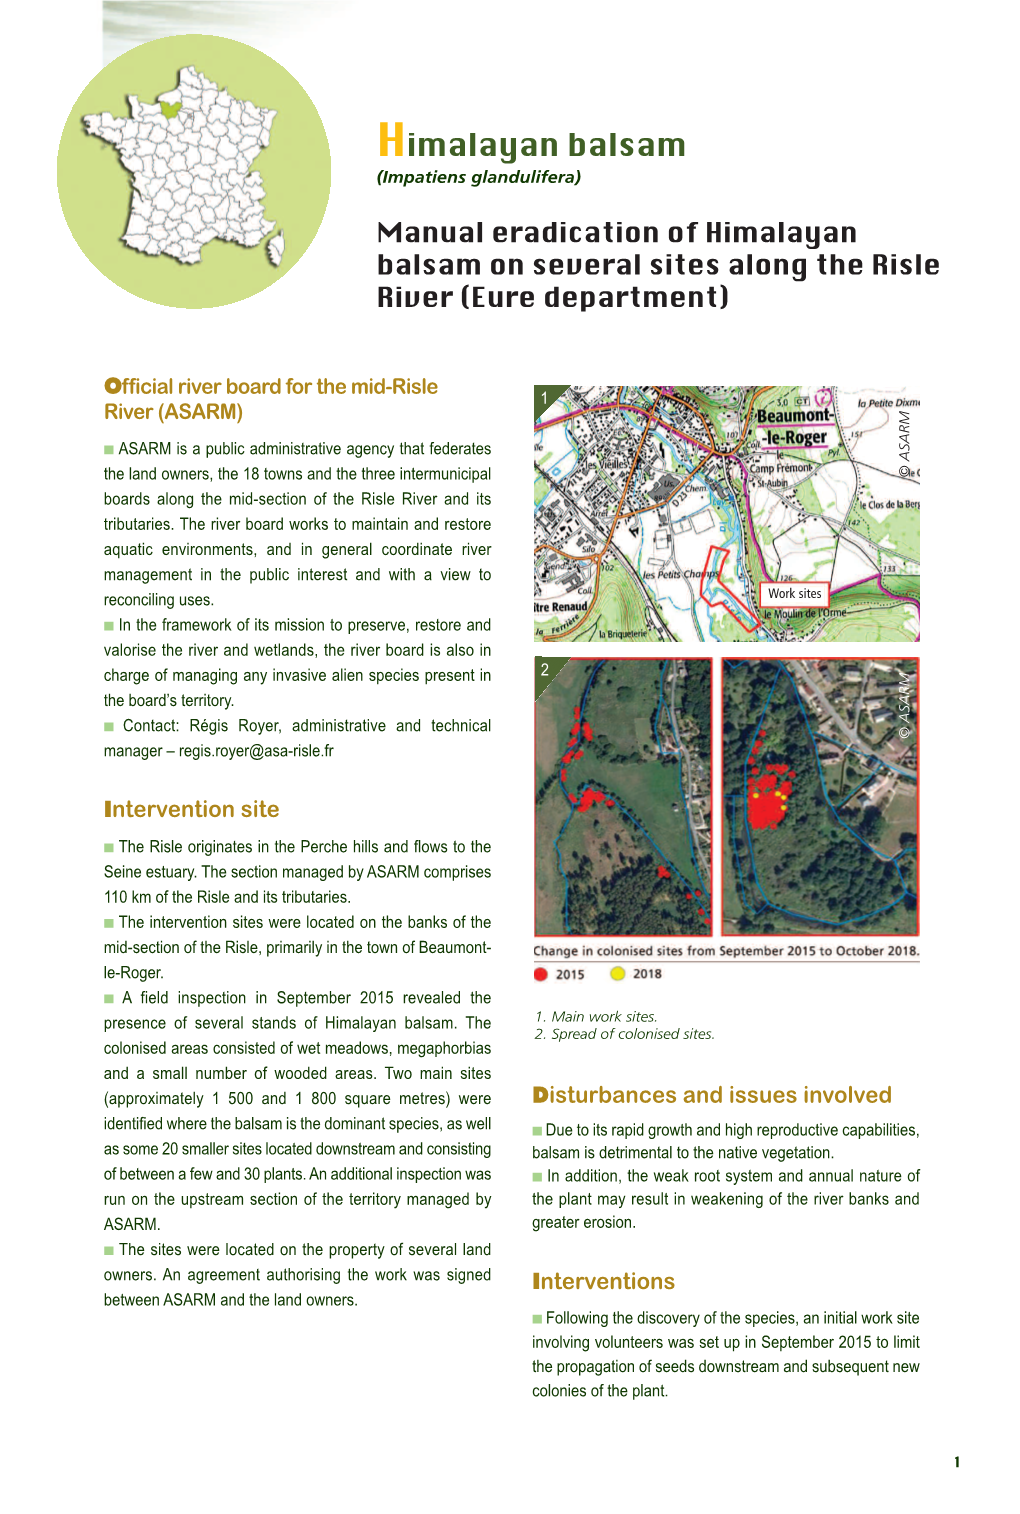 Manual Eradication of Himalayan Balsam on Several Sites Along the Risle River (Eure Department)